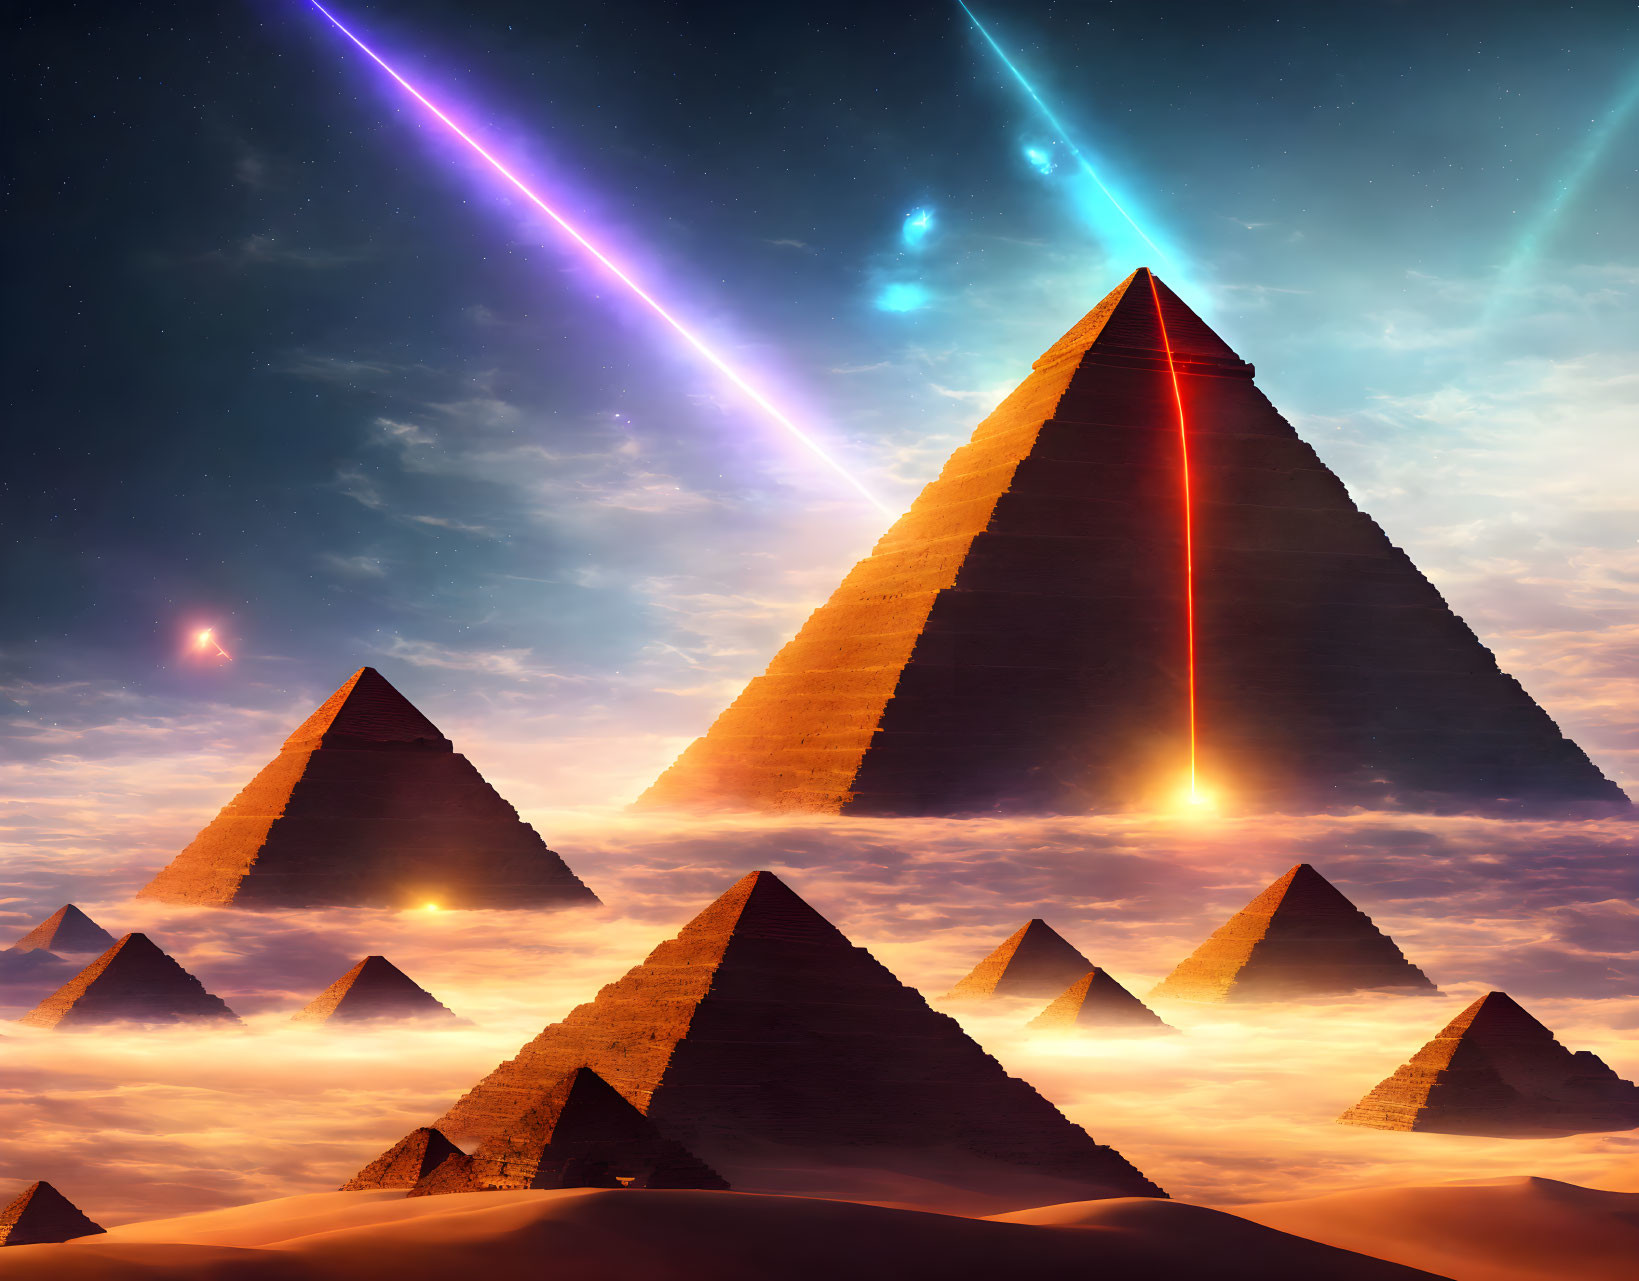 Pyramids under starry sky with cosmic lights and nebula